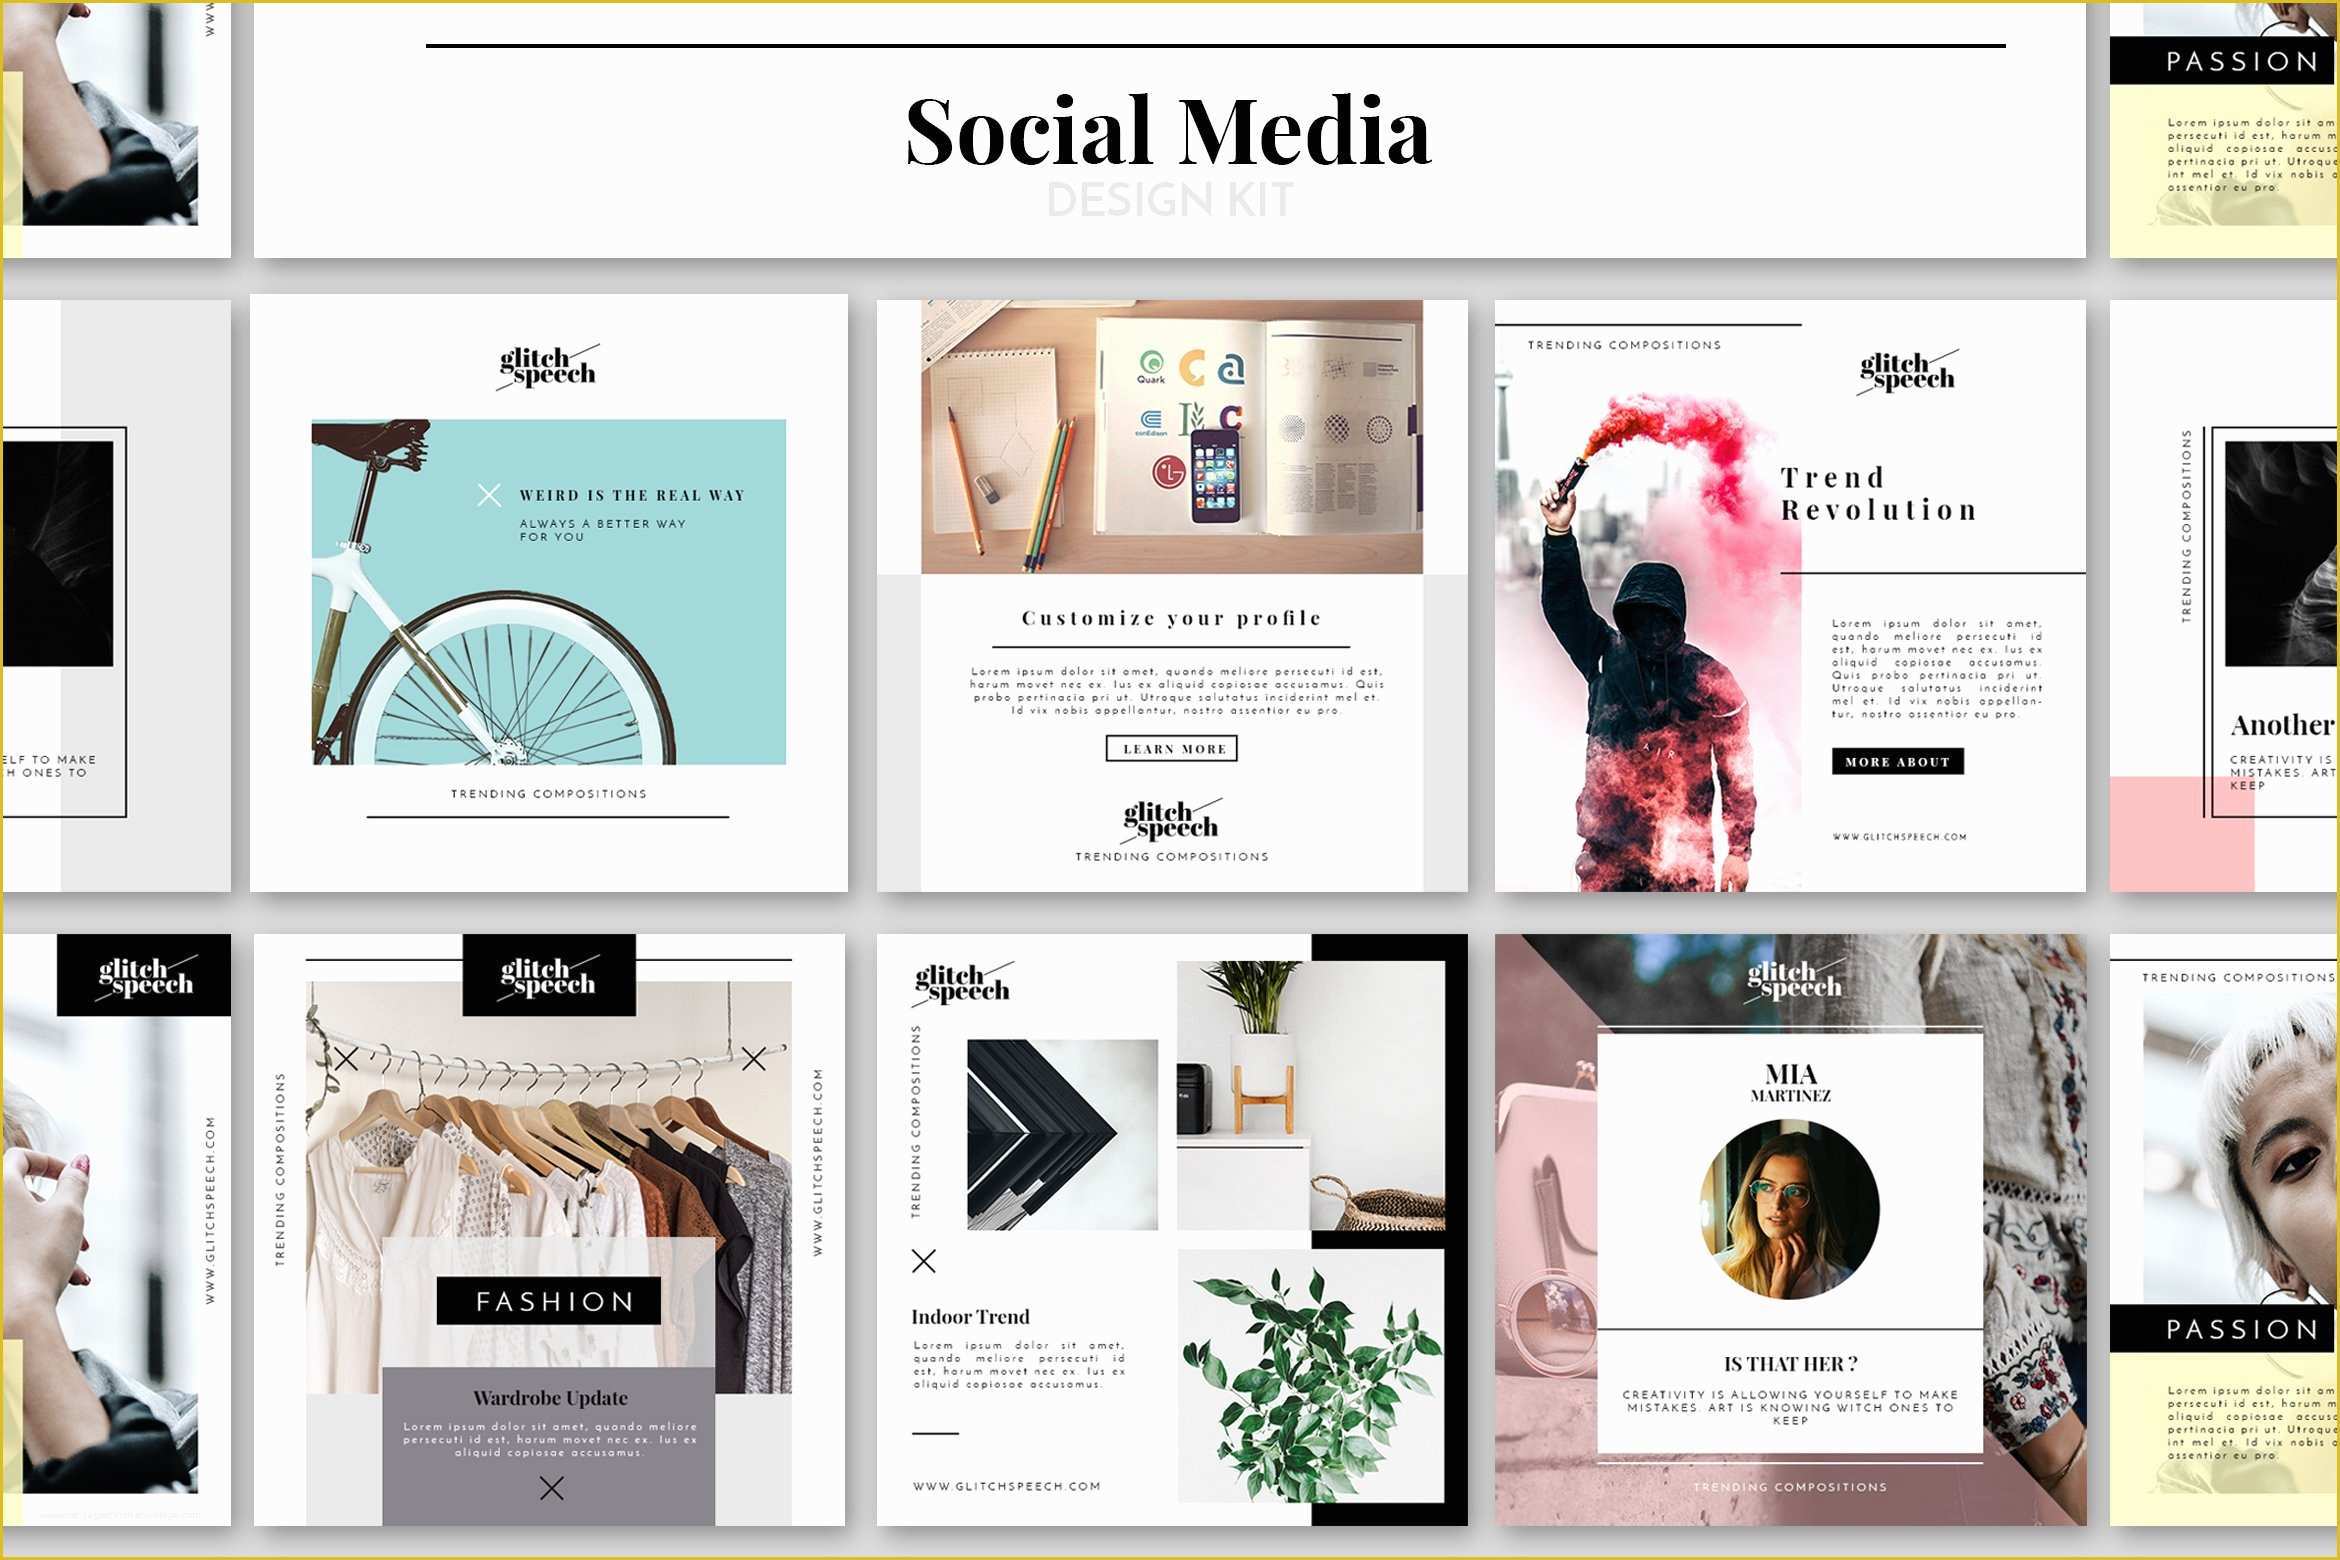 Social Media Design Templates Free Of social Media Design Kit Templates Creative Market